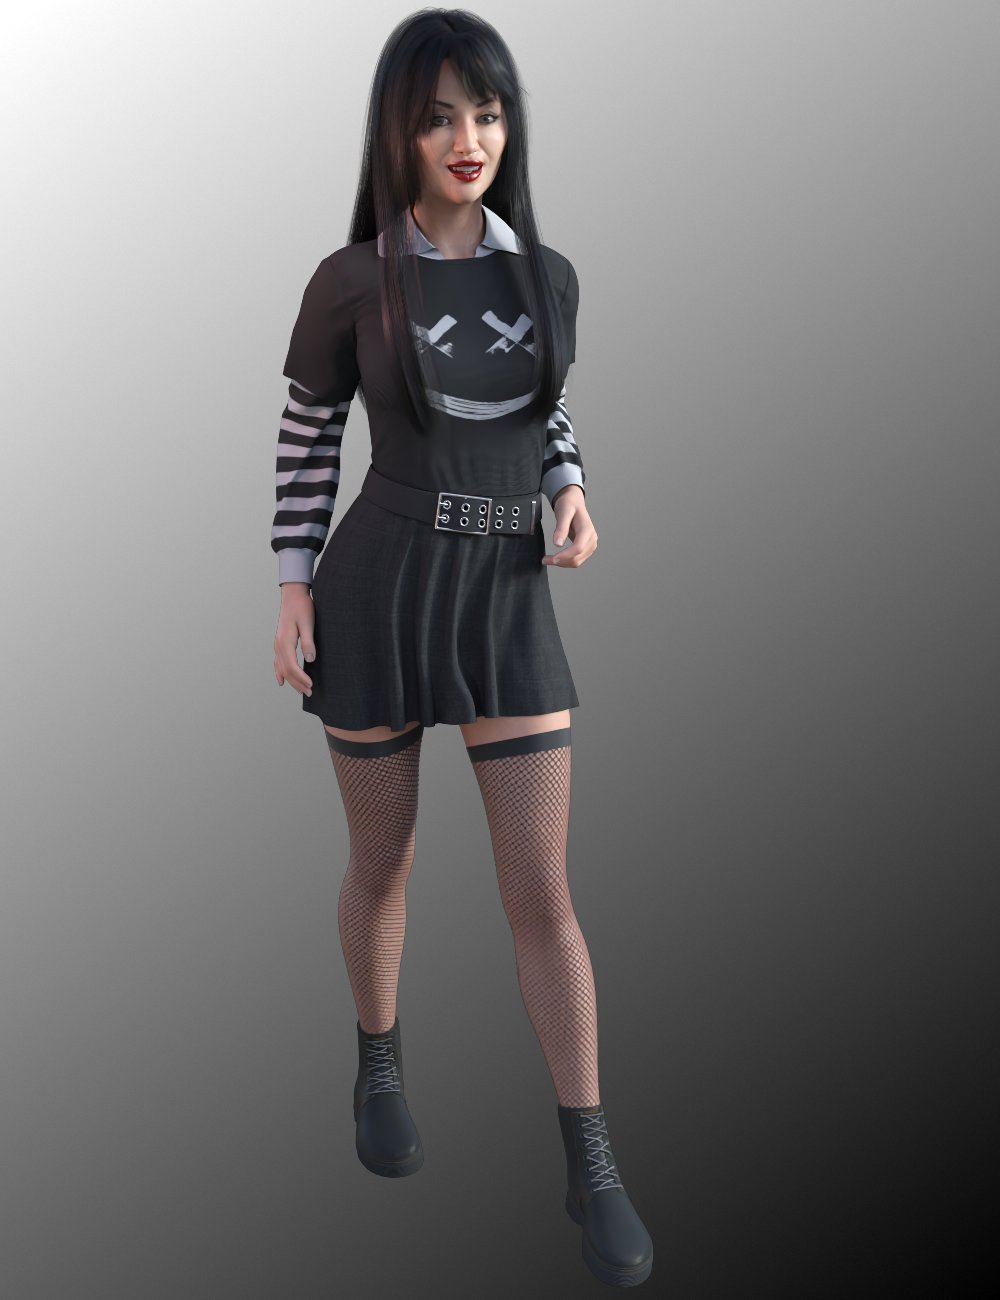 dForce FG Gothic Egirl Outfit for Genesis 8 Female by: IronmanFugazi1968, 3D Models by Daz 3D